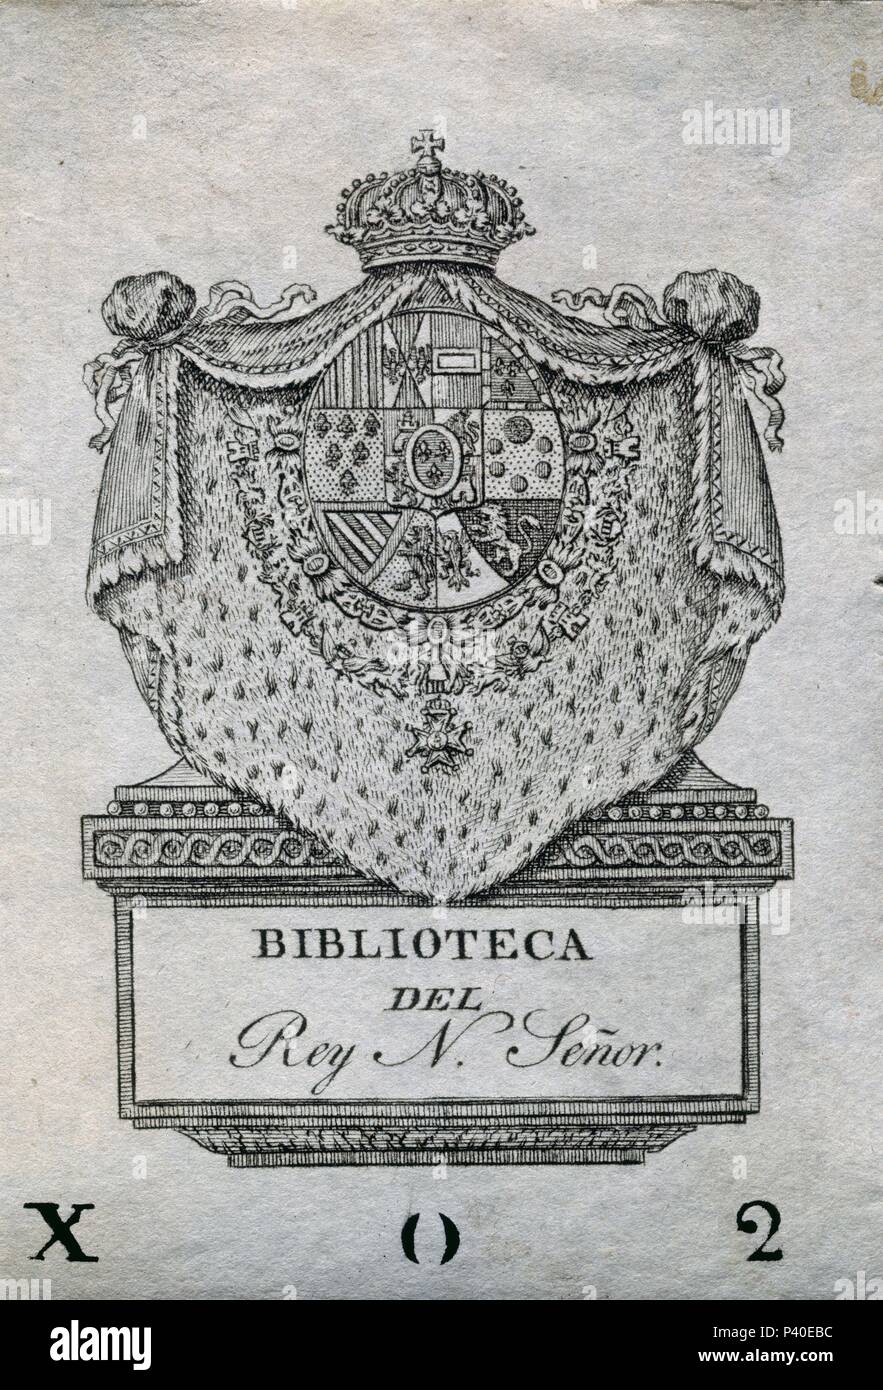 GRABADO-EXLIBRIS DE FERNANDO VII-COL CORONA ESPAÑA-. Author: Manuel Salvador Carmona (1734-1820). Location: PALACIO REAL-BIBLIOTECA, MADRID, SPAIN. Stock Photo